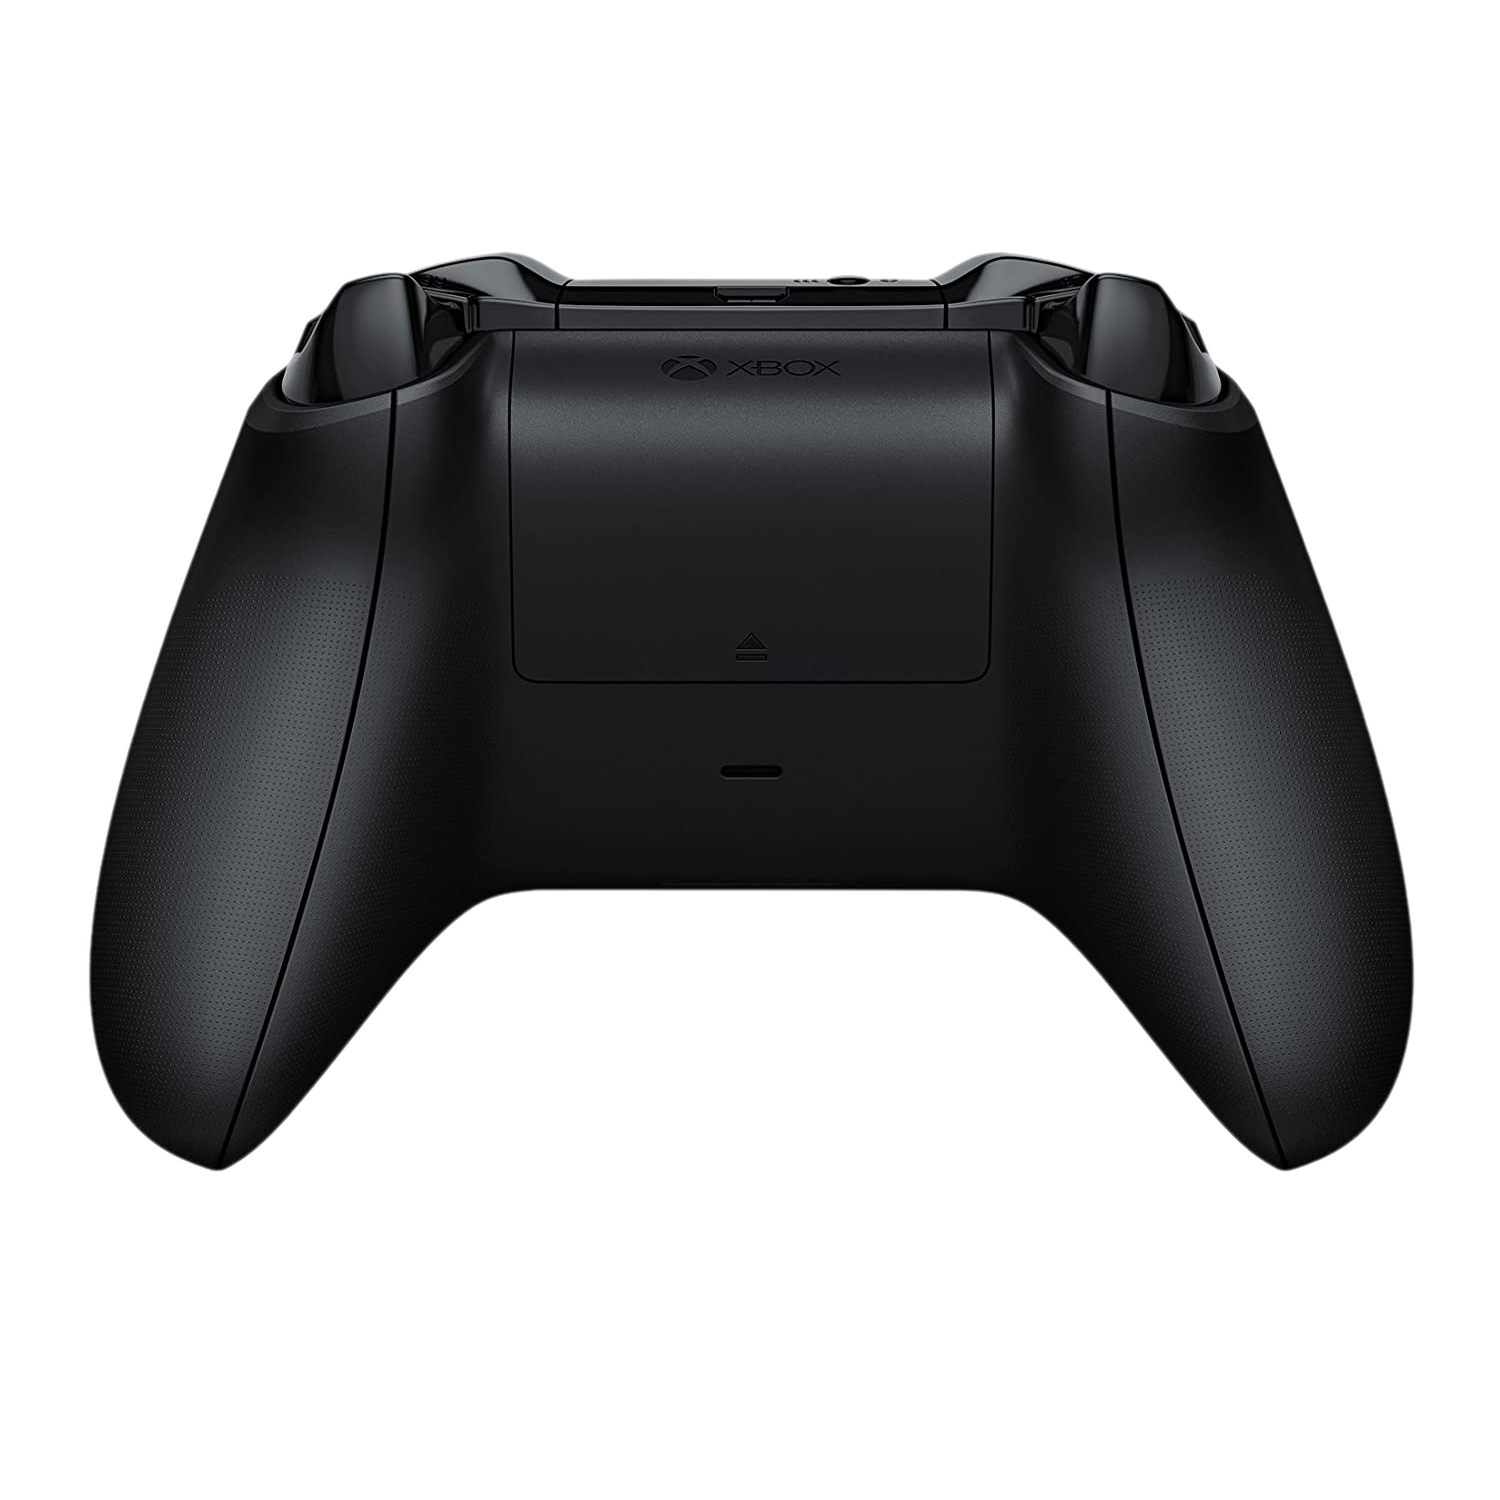 Microsoft-Official-Xbox-Controller-Black-12-Months-Warranty-3_b8dcc0b0-3d83-43bf-a7d5-47d7040efb8b